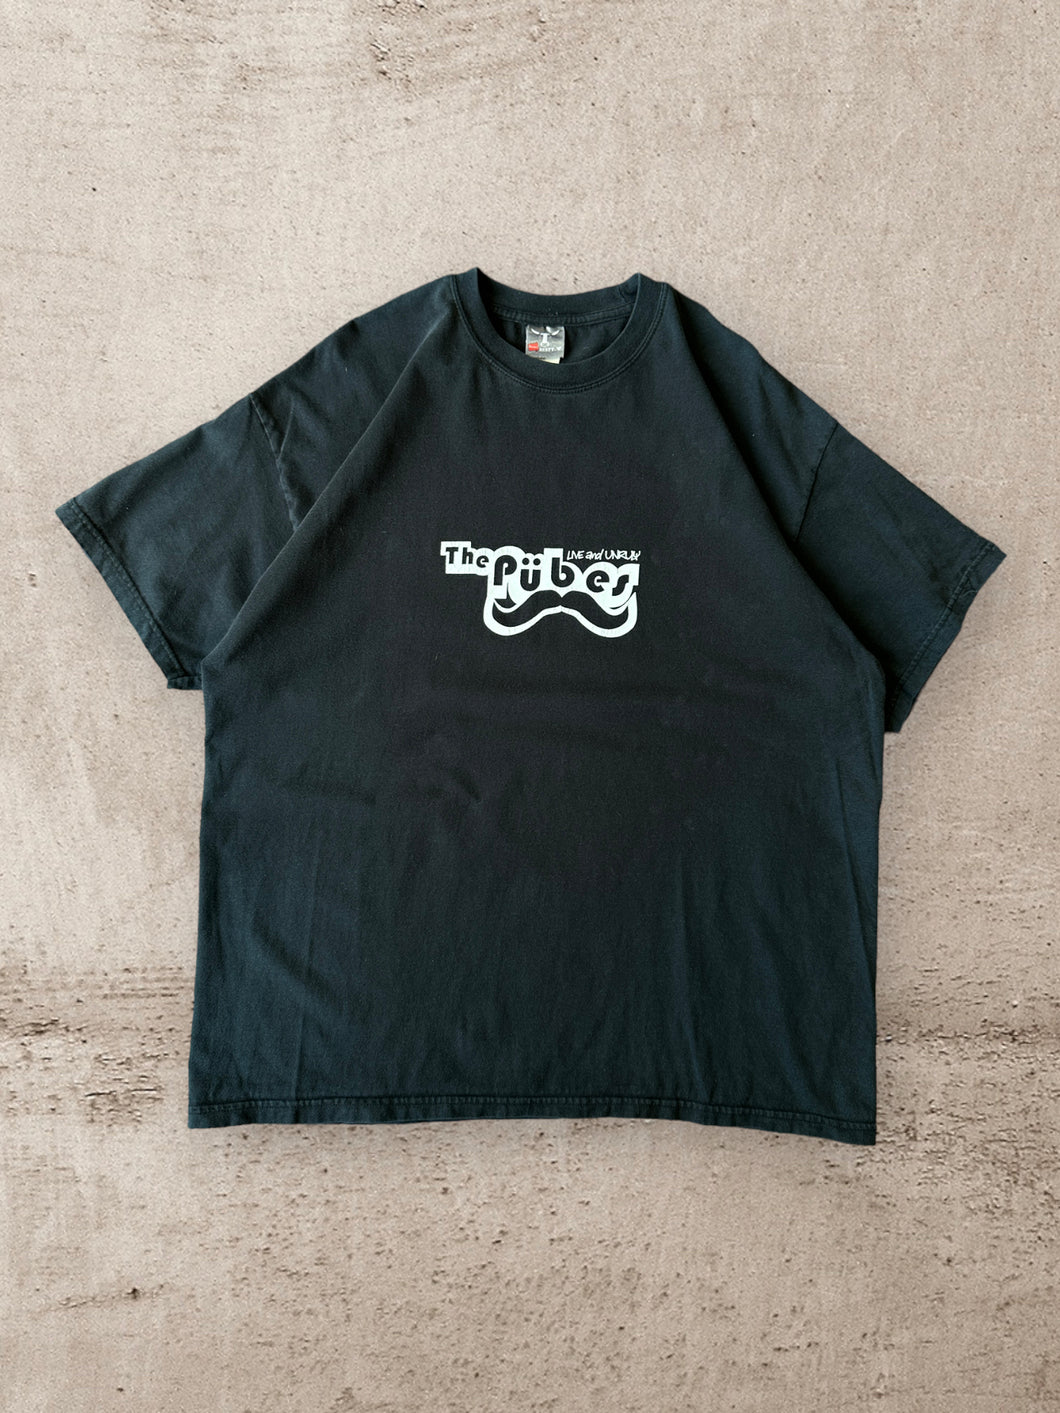 Vintage The Pübes Live & Unruly Band T-Shirt - XL